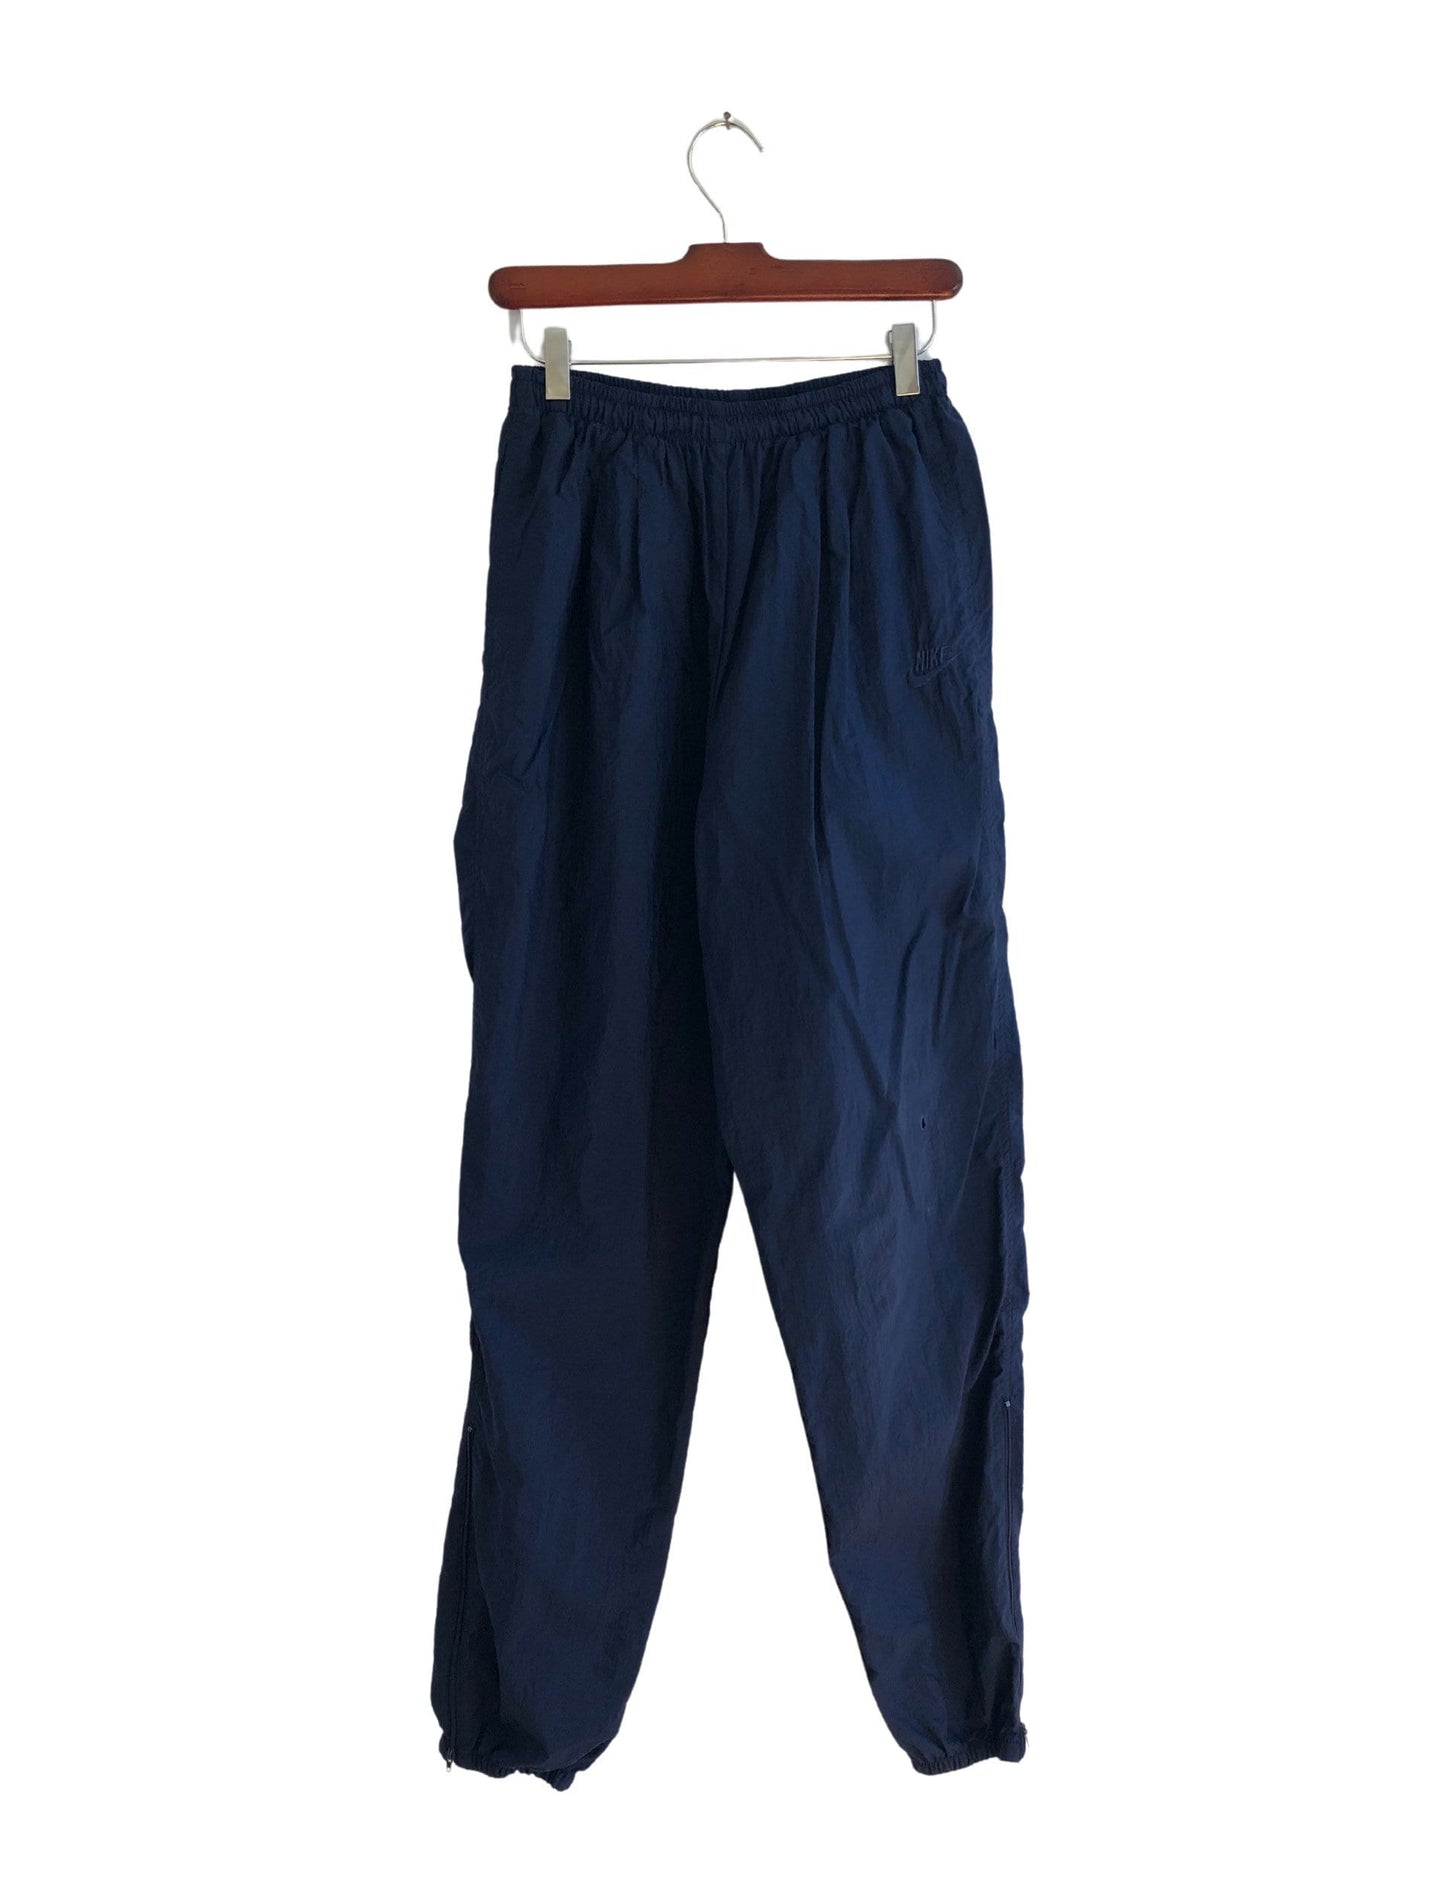 90’s NIKE Swoosh Navy Blue Nylon Athletic Track Ankle Zip Jogger Pants Size Large